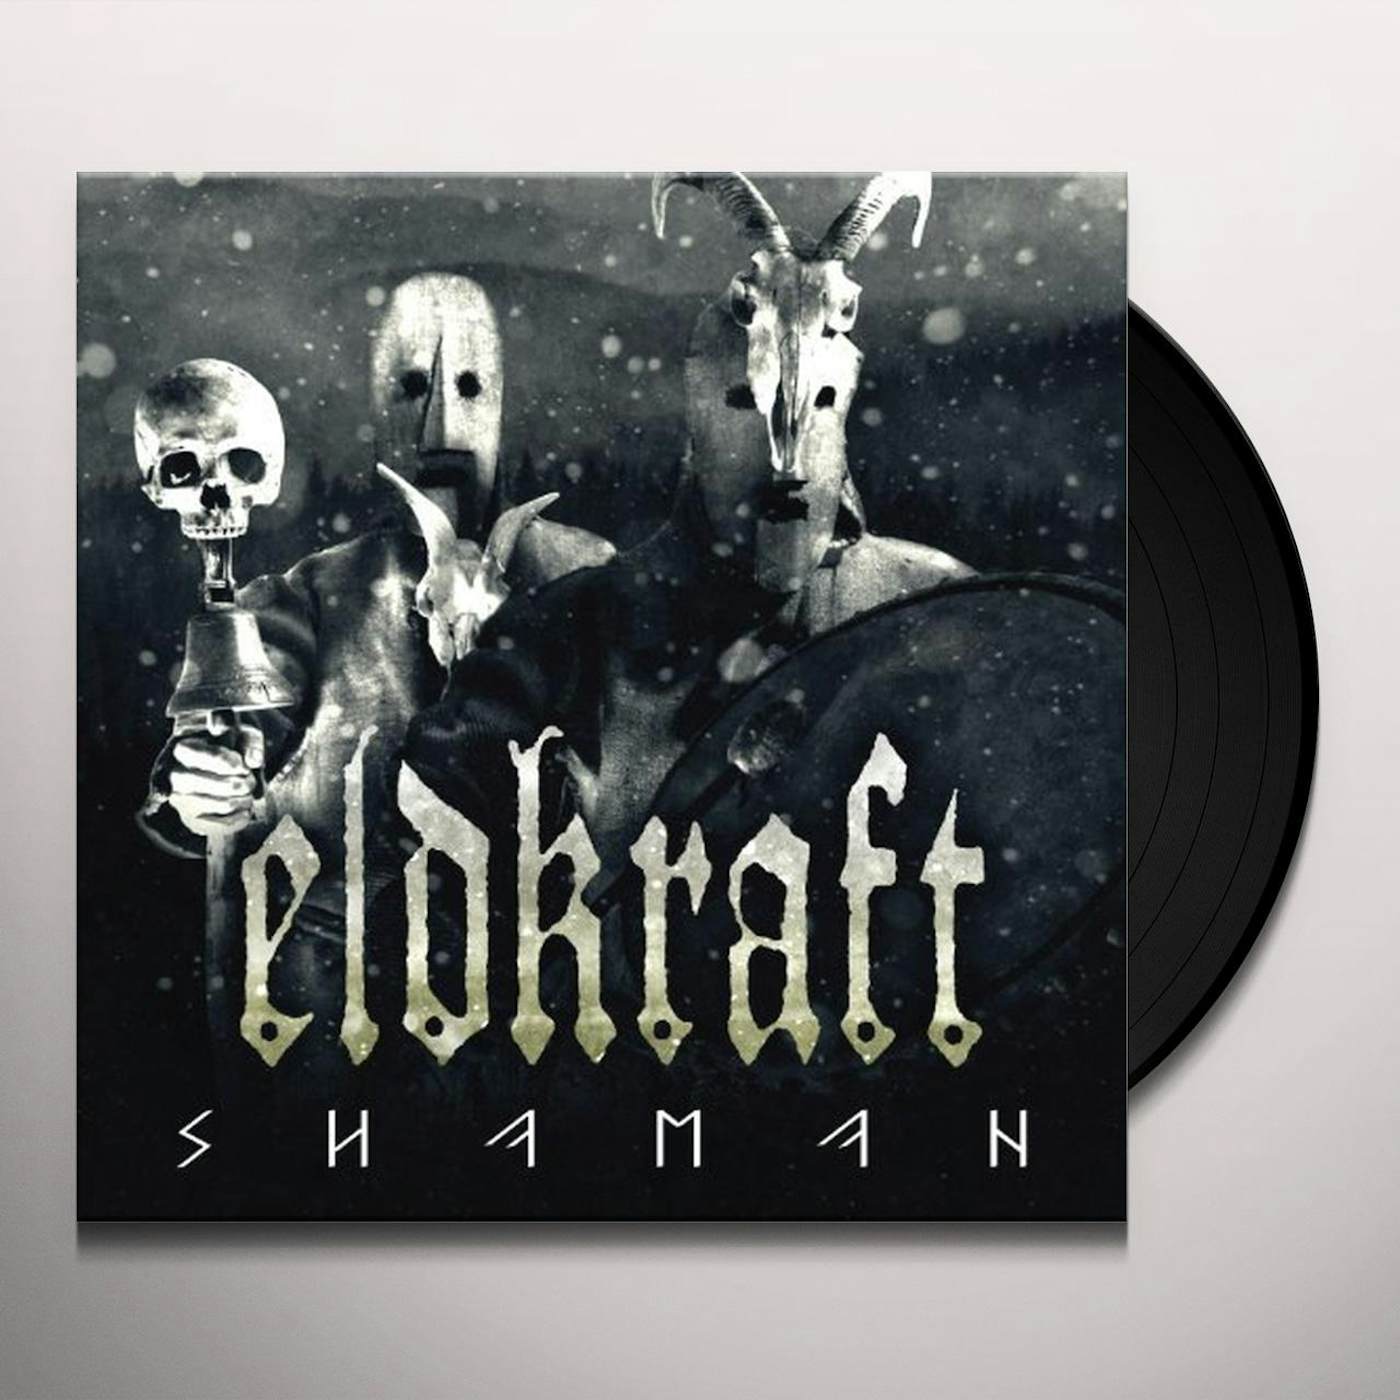 Eldkraft Shaman Vinyl Record